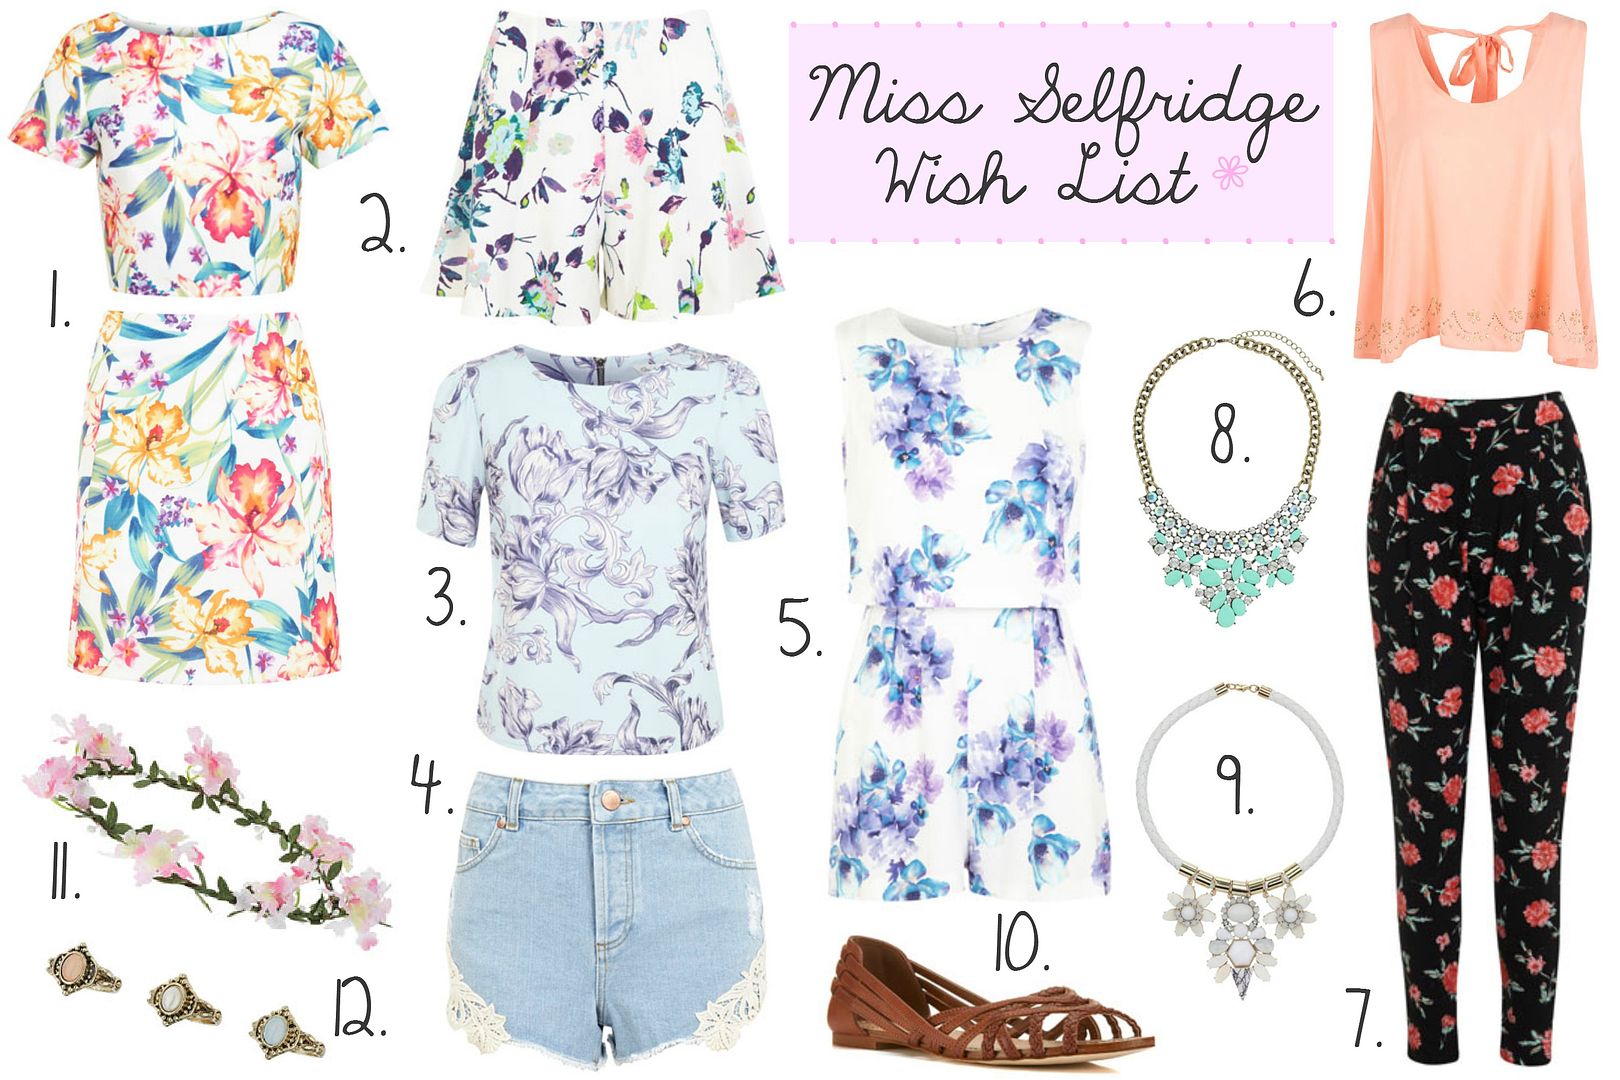 Miss Selfridge Florals Pastels Fashion Accessories Wish List Summer 2014 Belle-amie UK Beauty Fashion Lifestyle Blog